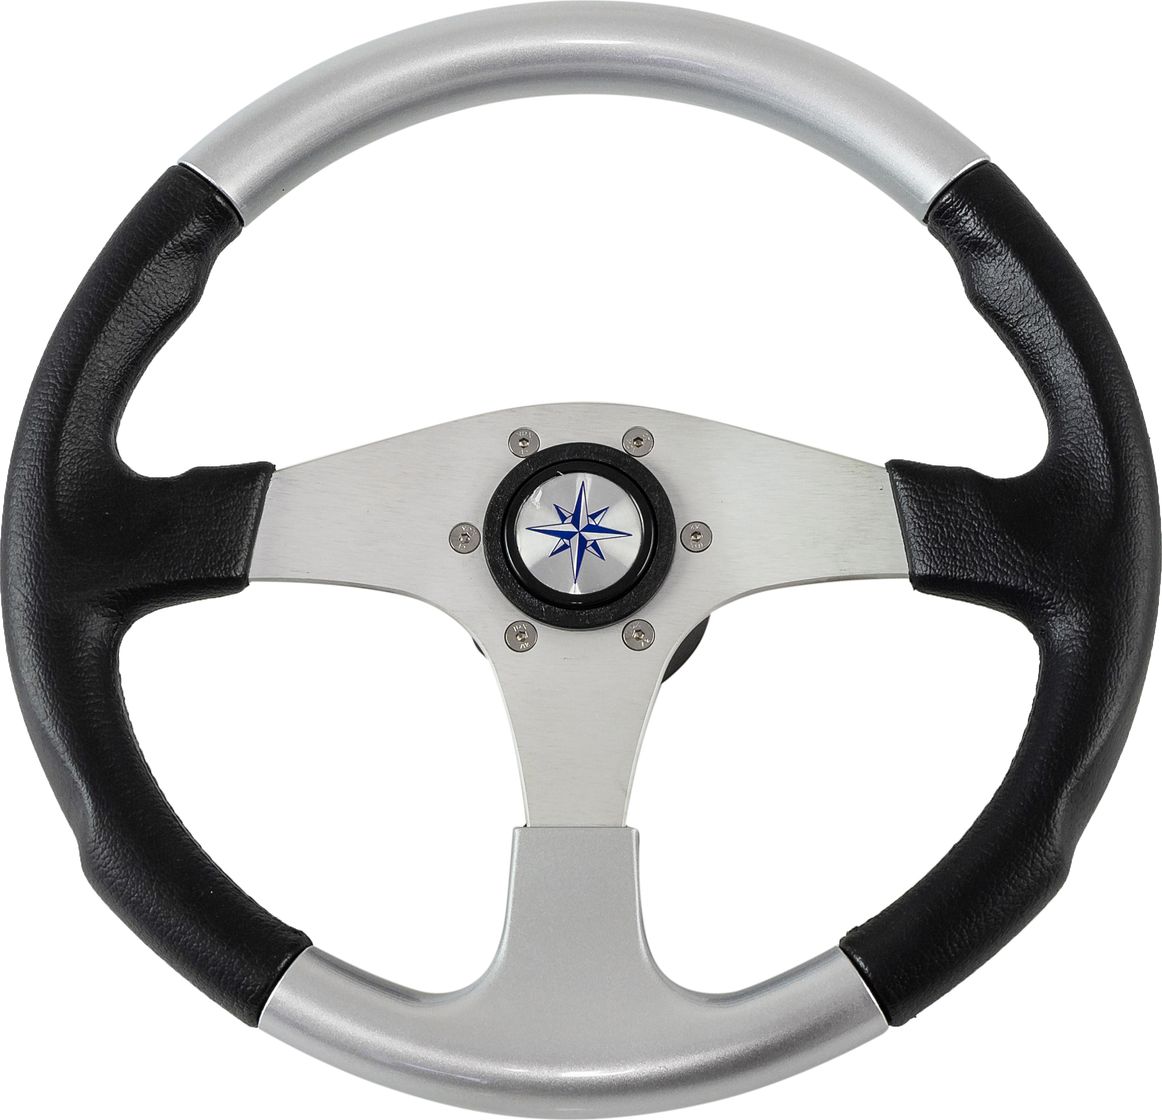 Рулевое колесо EVO MARINE 2 обод черносеребряный, спицы серебряные д. 355 мм VN850001-93 рулевое колесо leader tanegum белый обод серебряные спицы д 330 мм vn7330 08